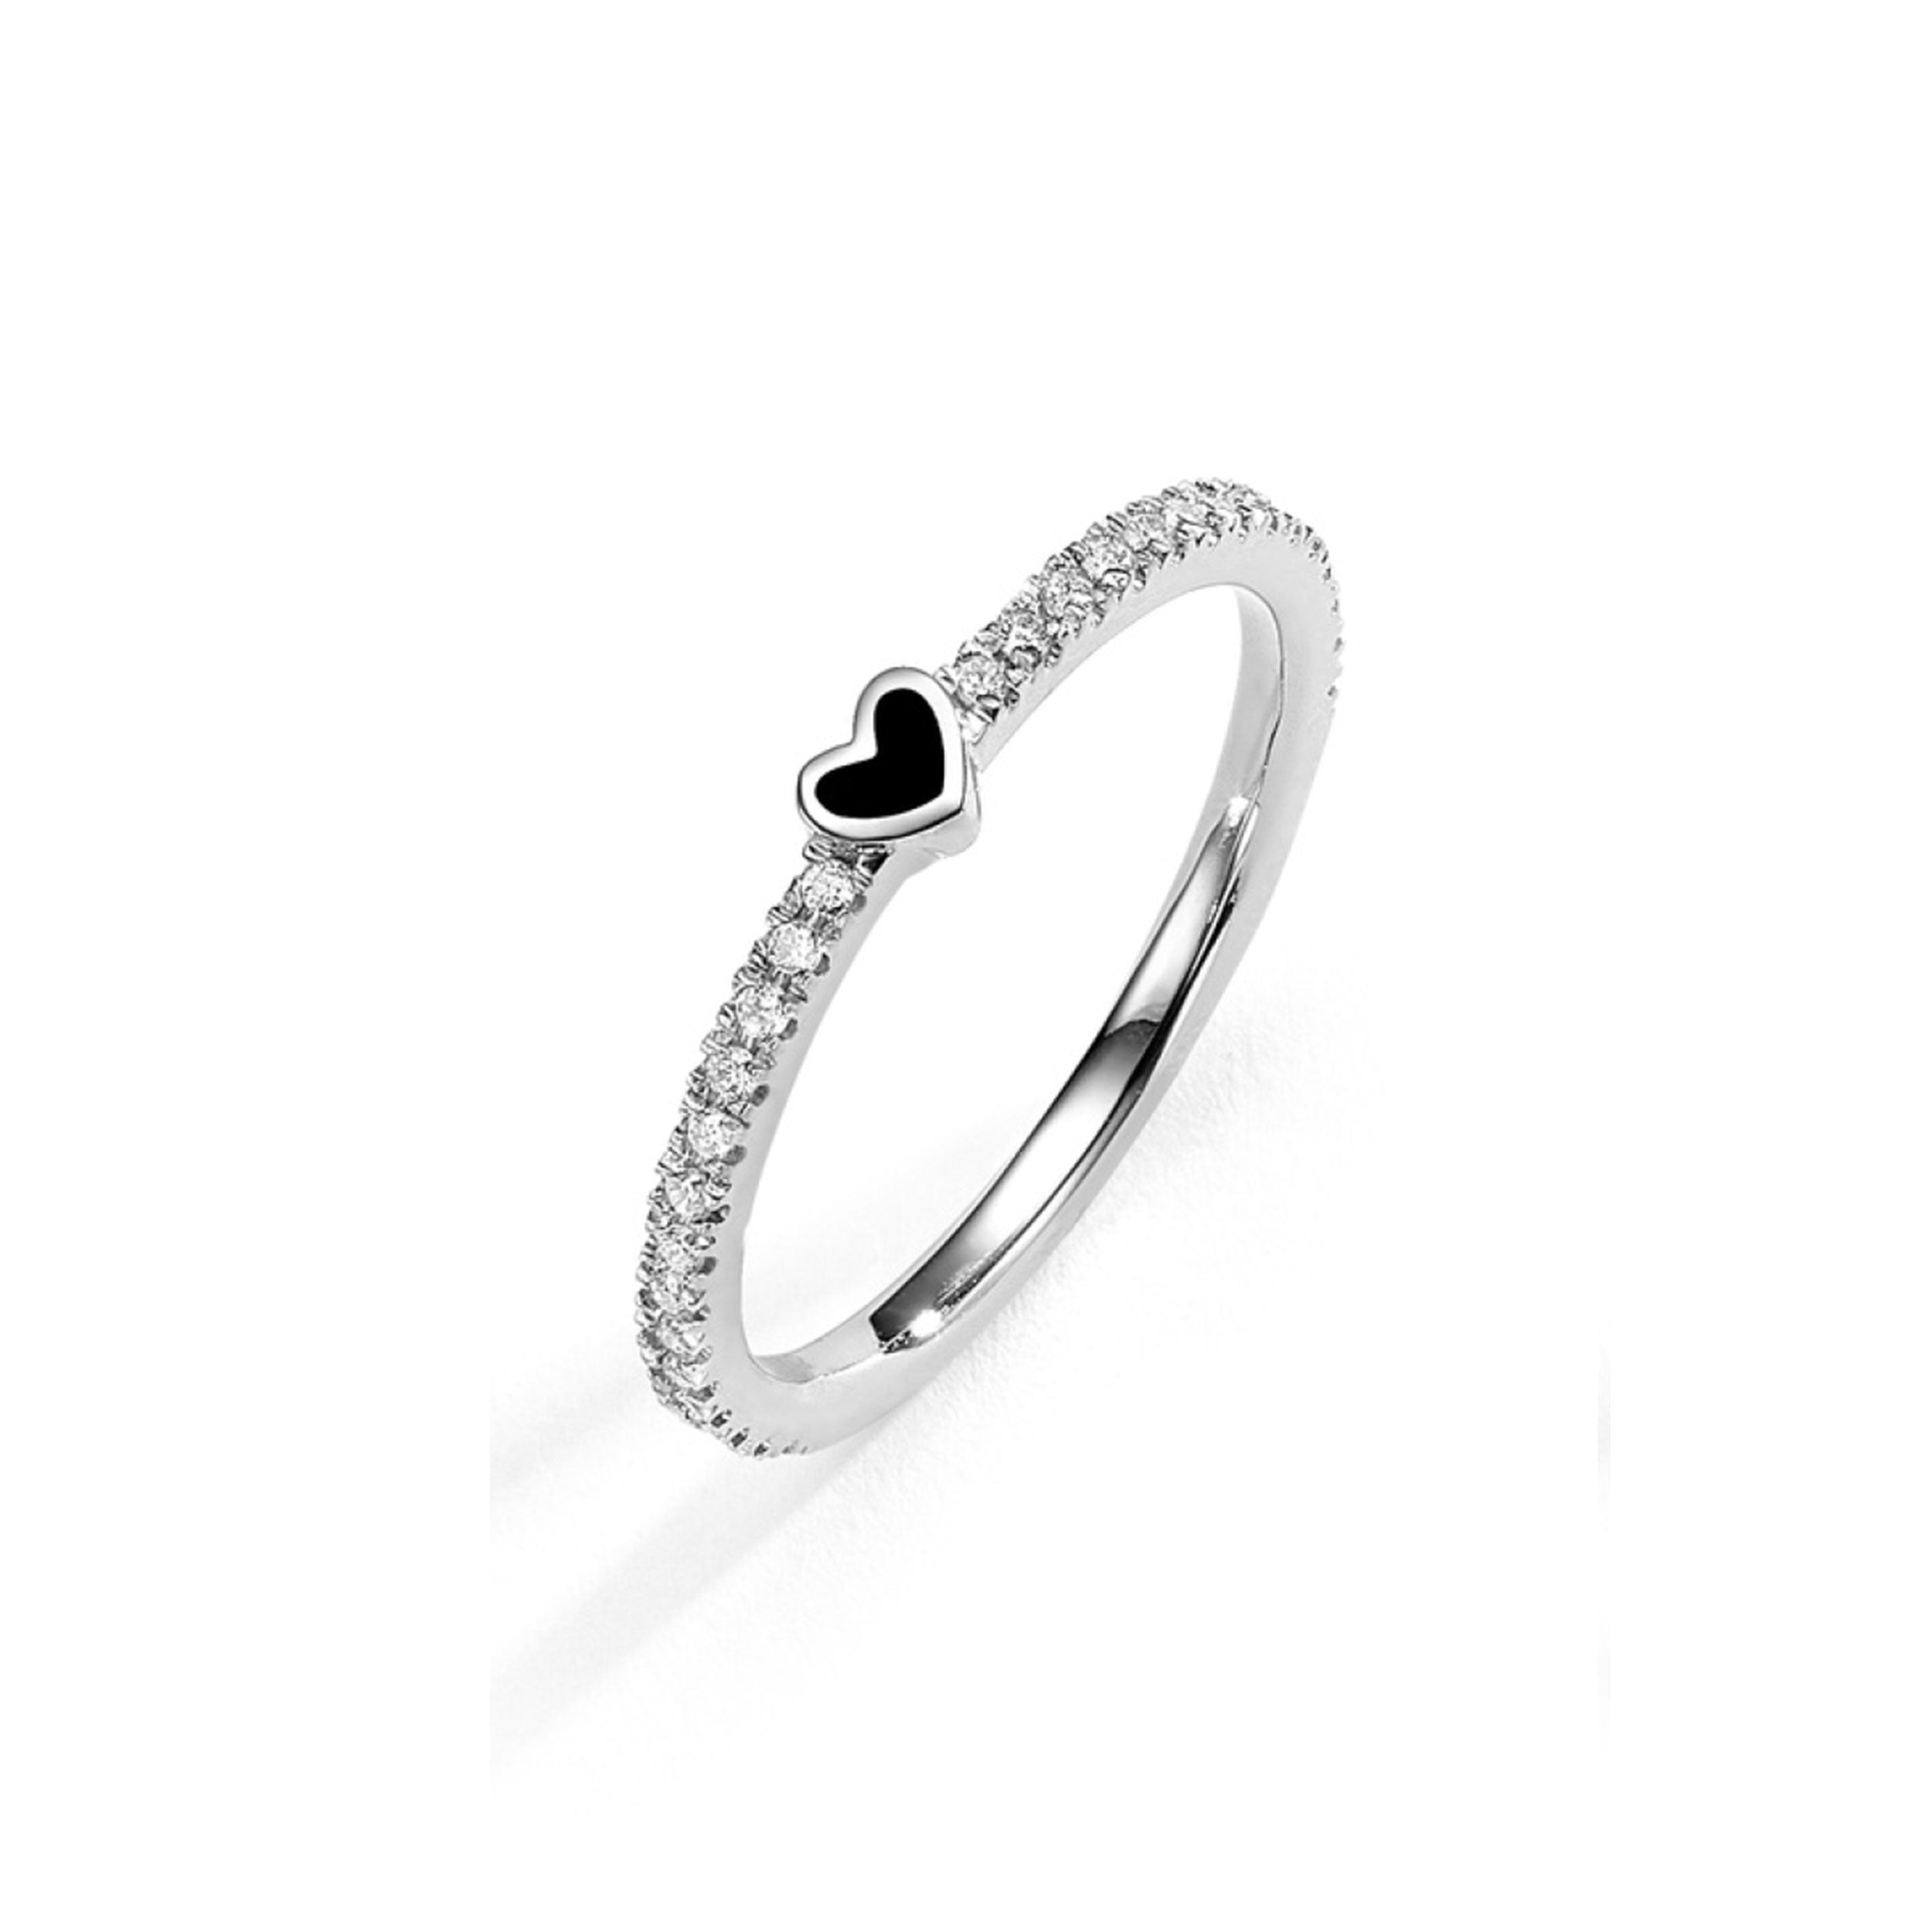 Antonella: 1.50 carat heart diamond engagement ring | Nature Sparkle